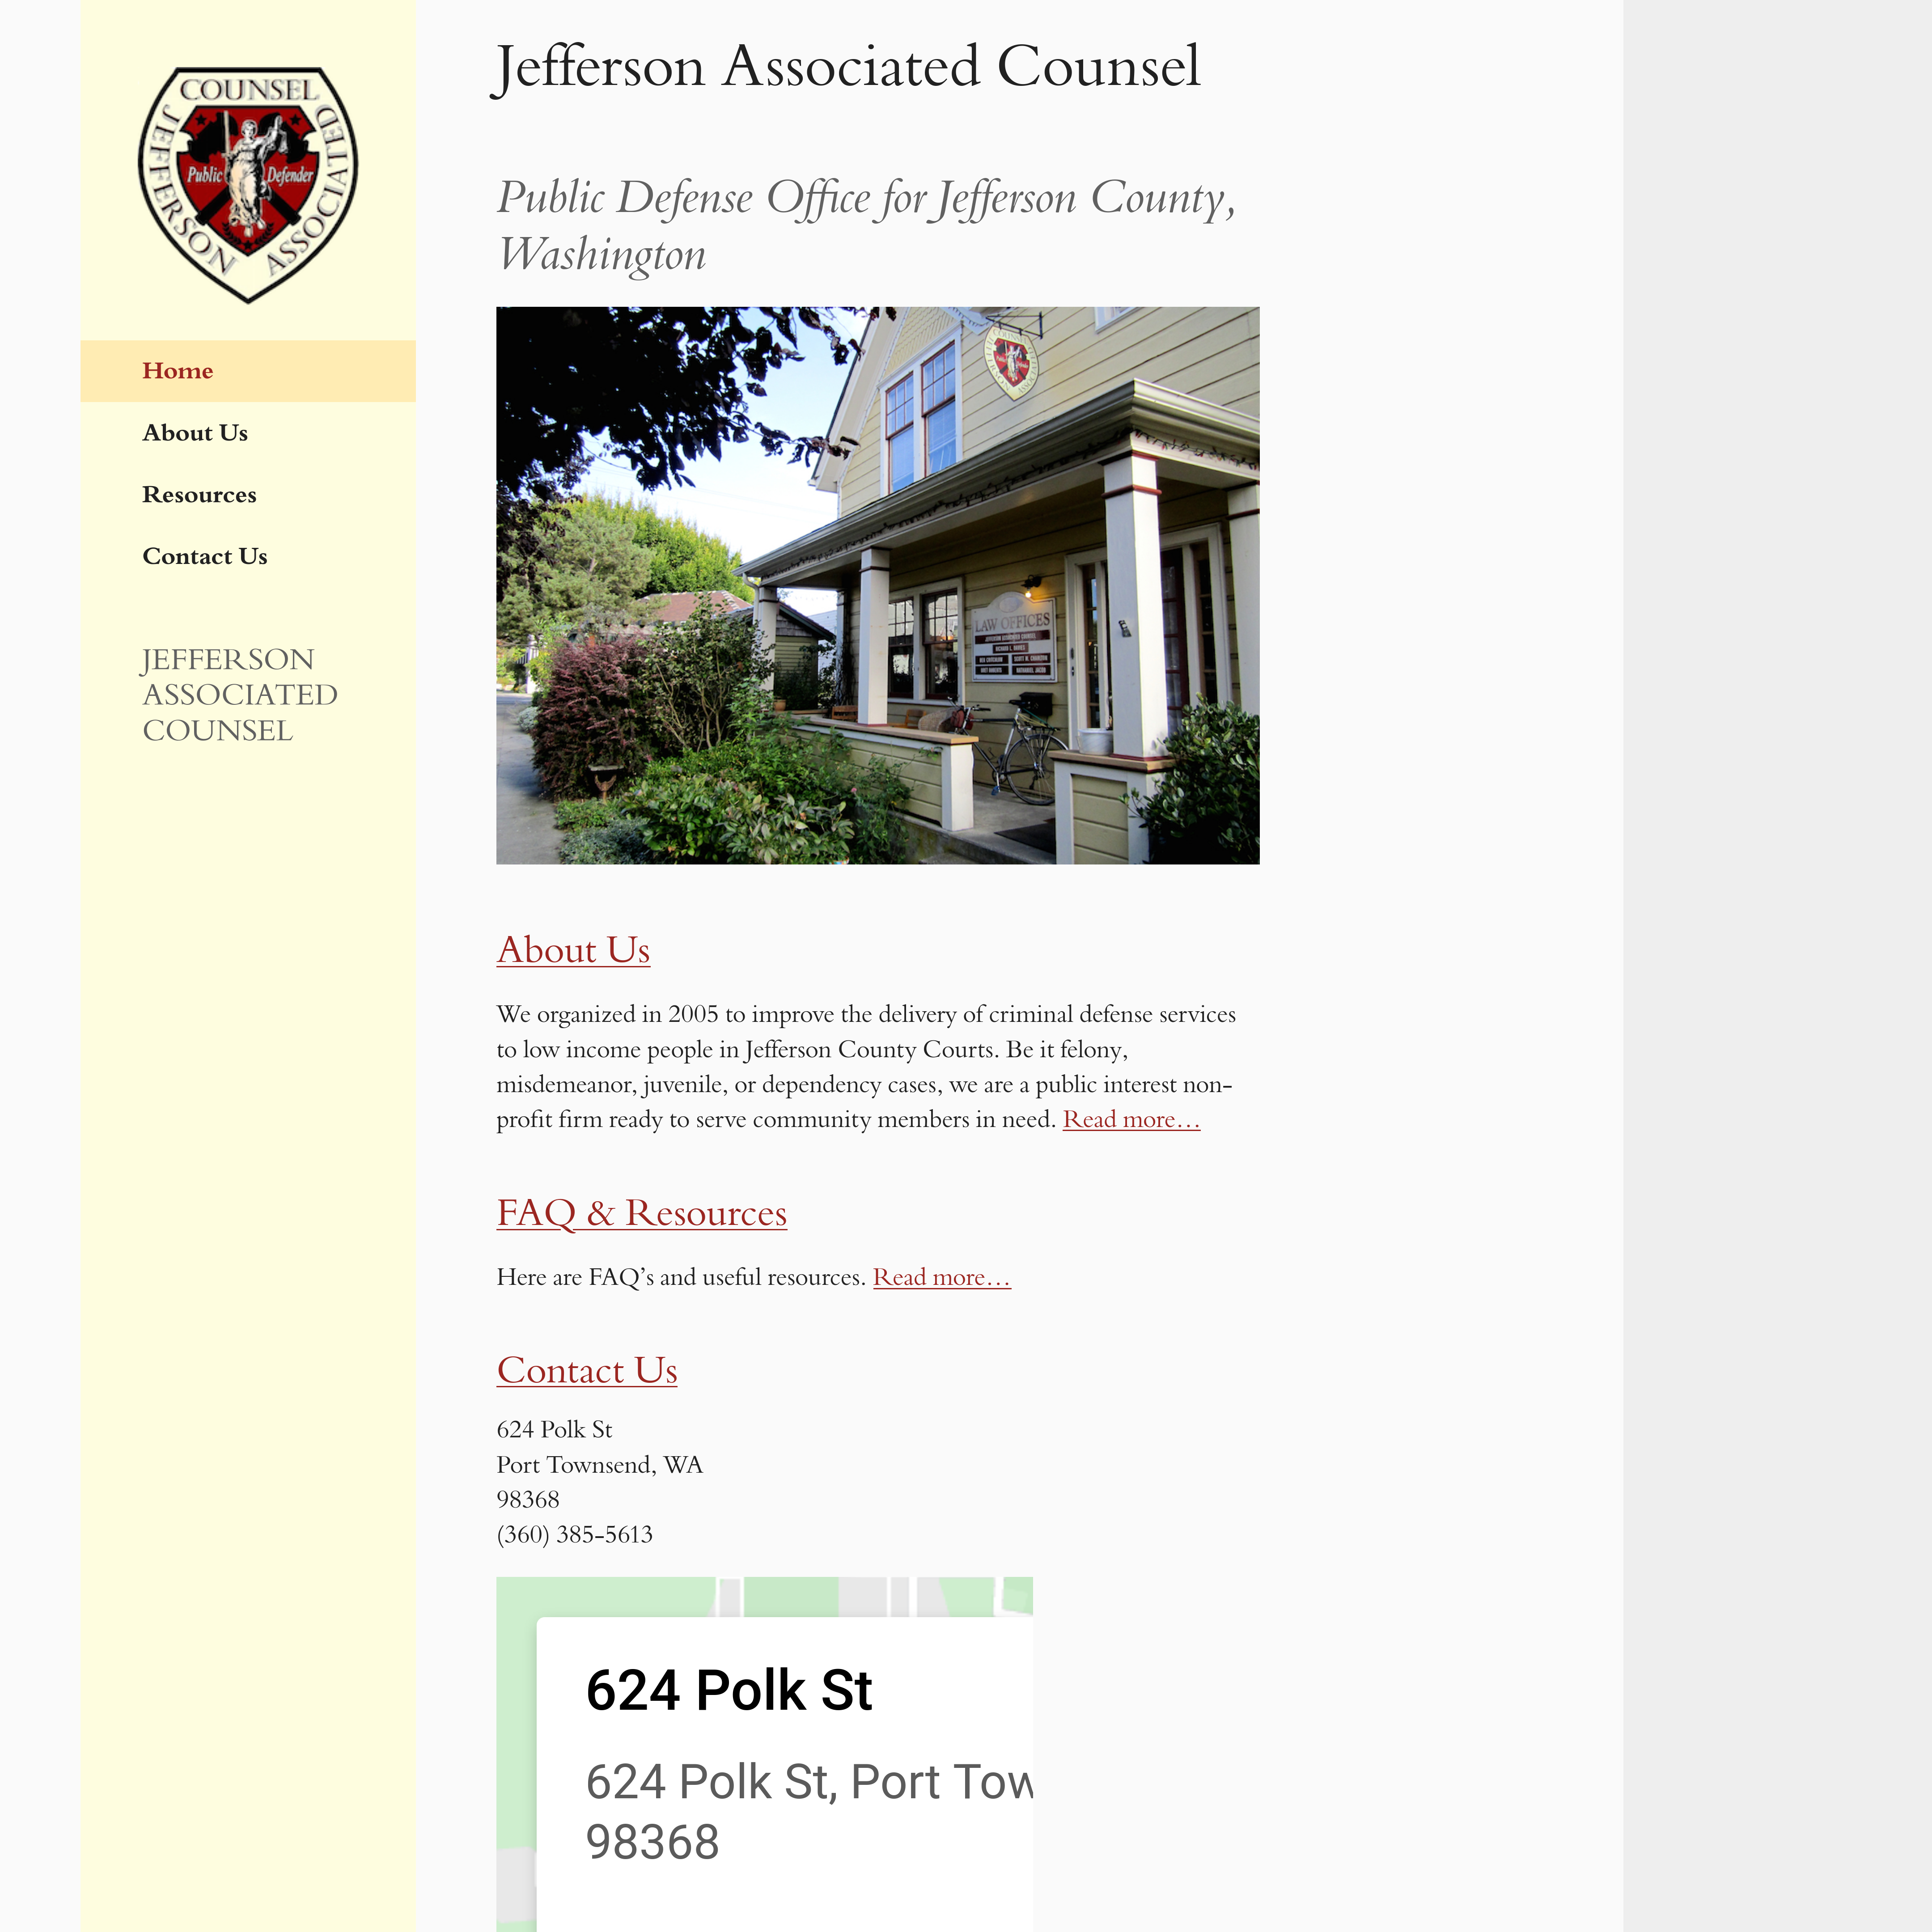 Jefferson Associated Council